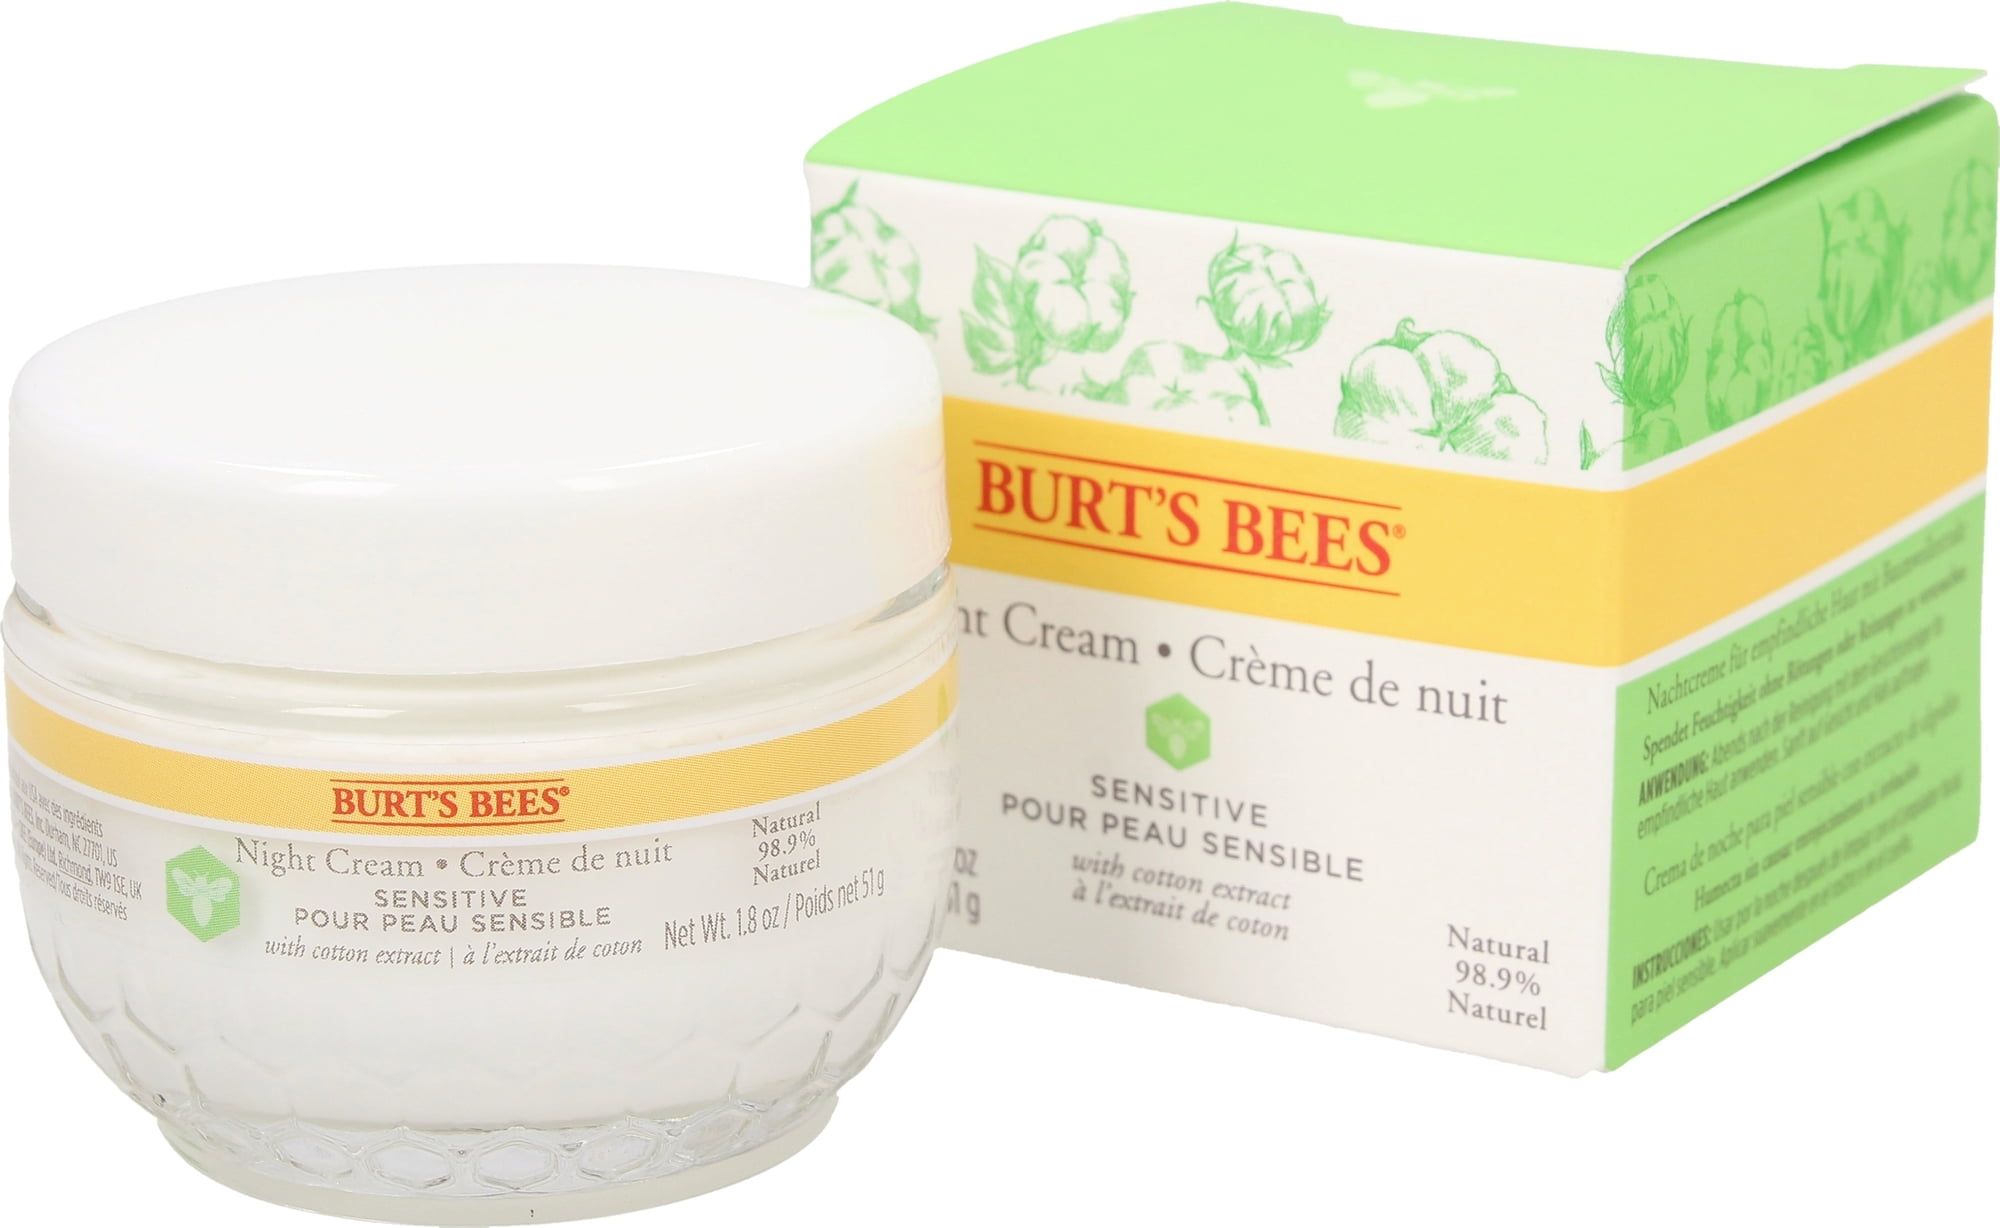 https://ec.nice-cdn.com/upload/image/product/large/default/burts-bees-sensitive-night-cream-50g-1182979-en.jpg